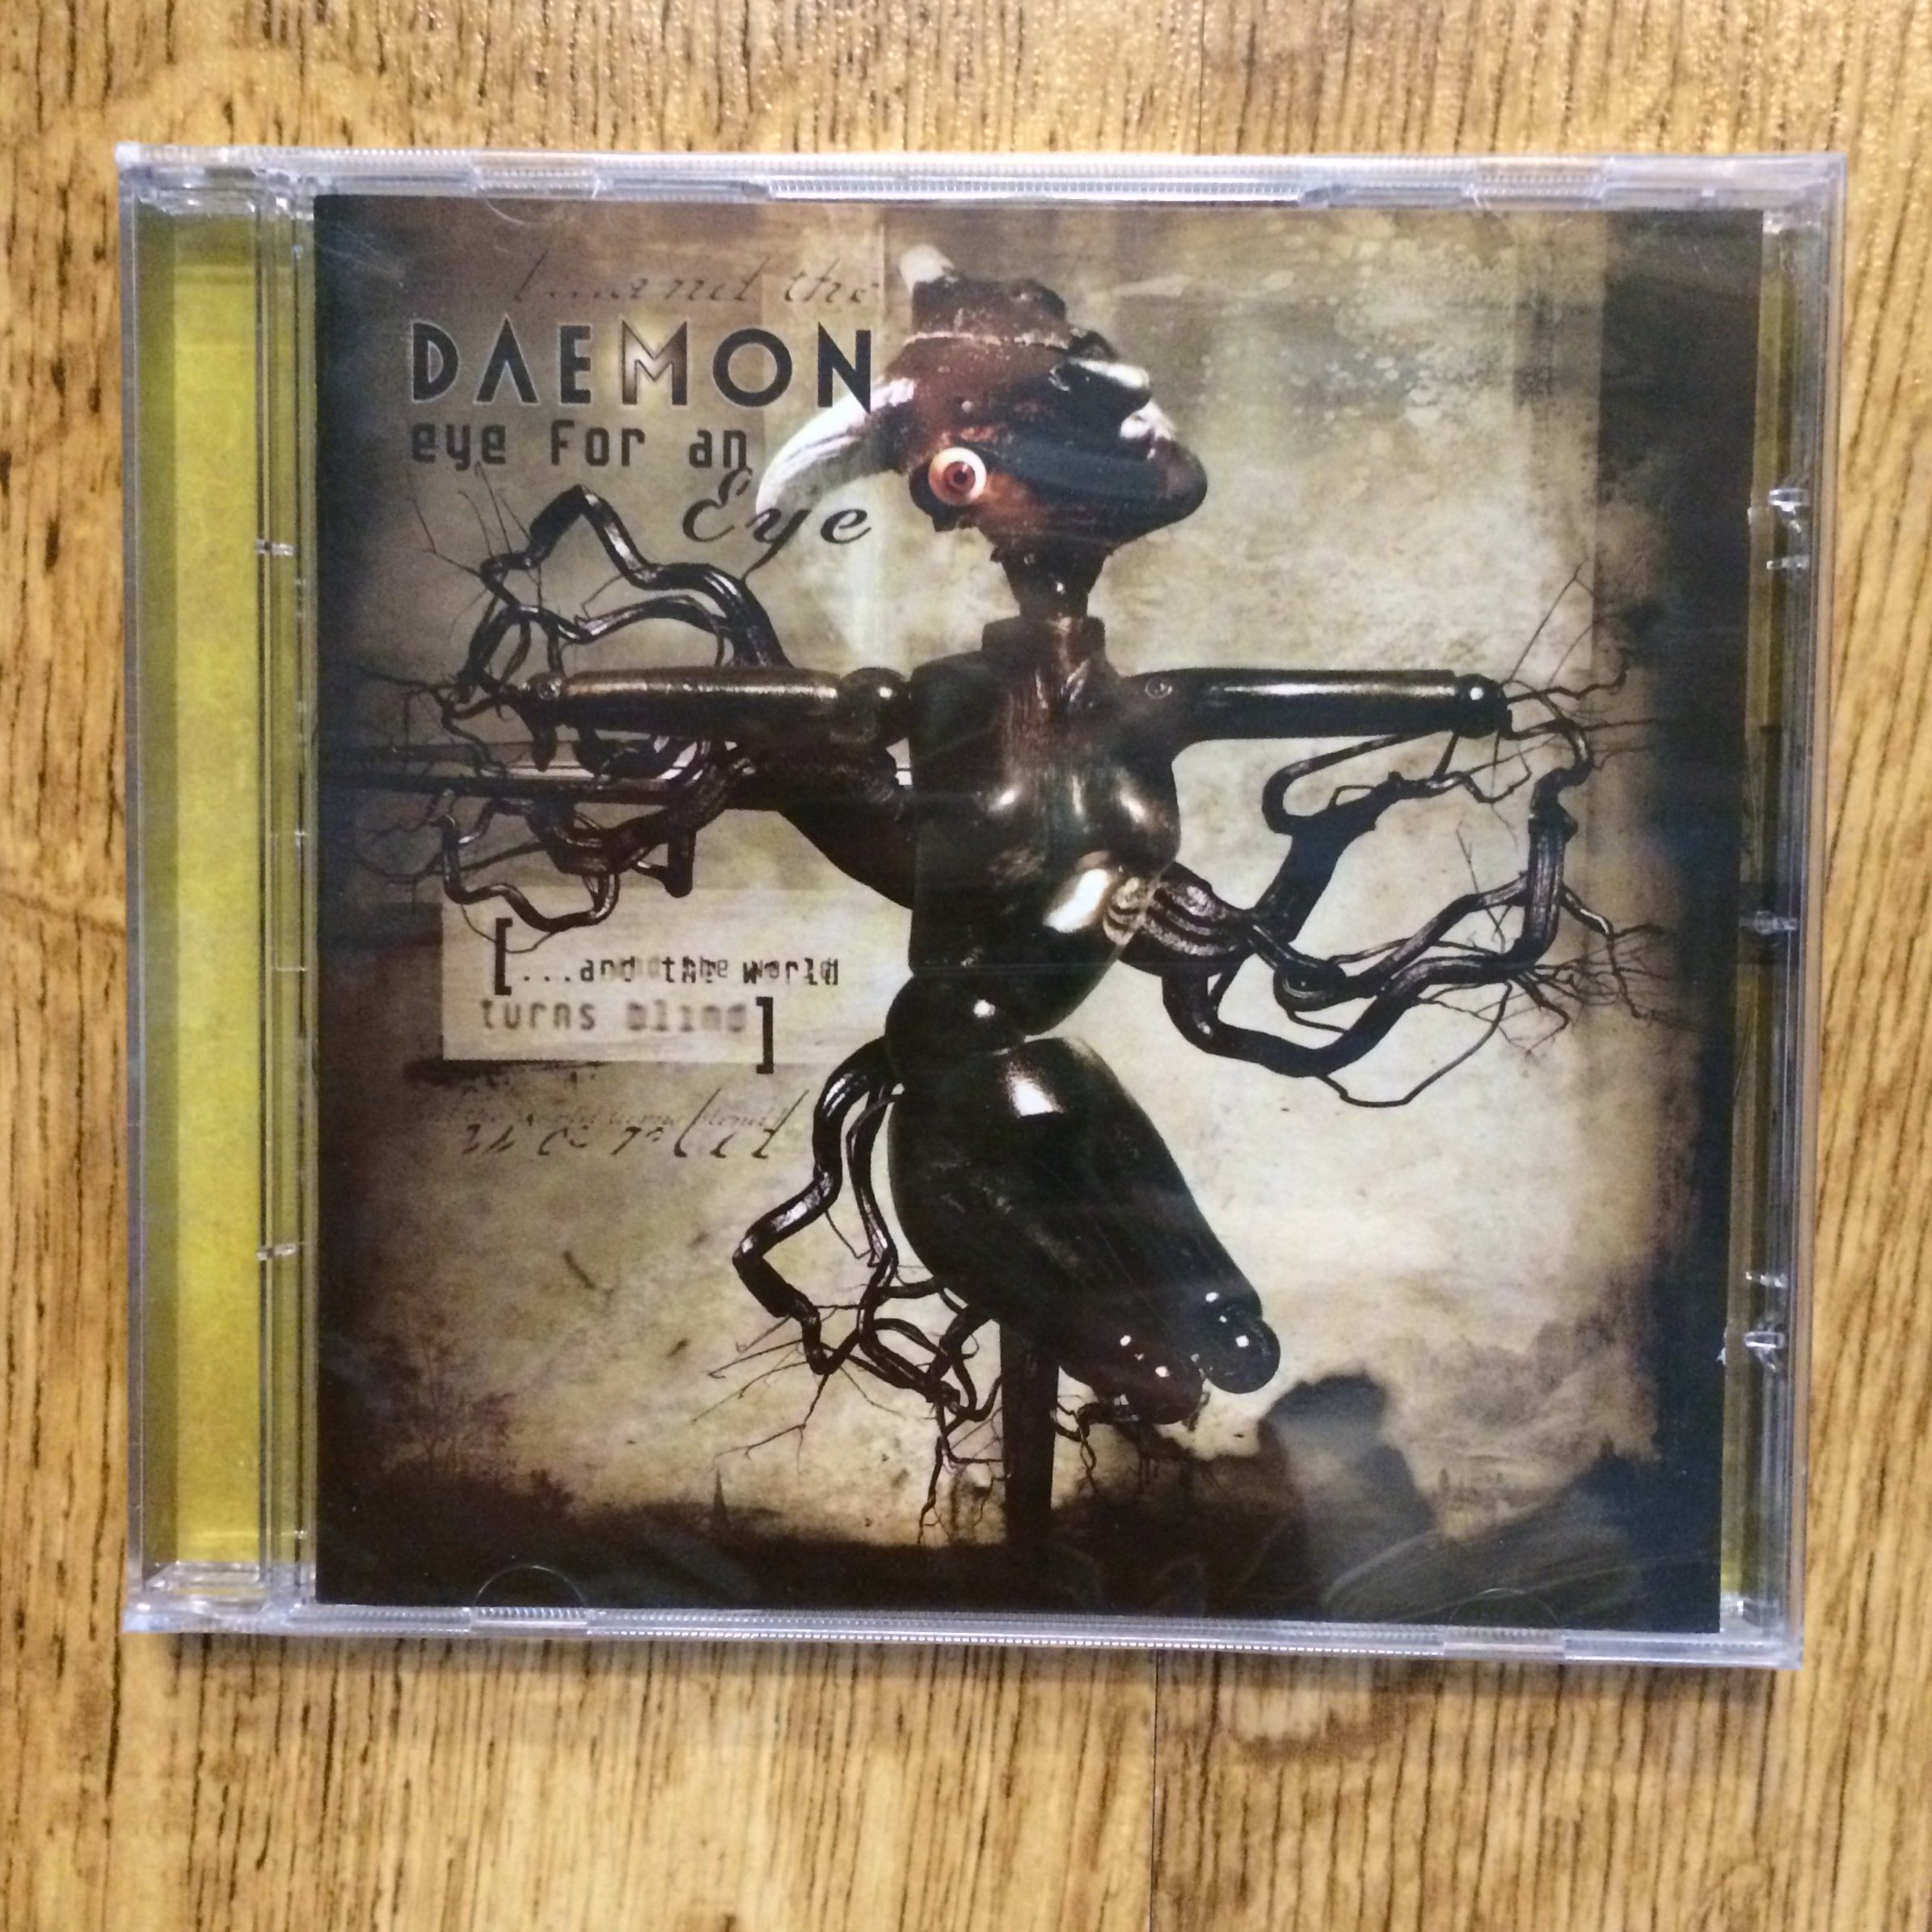 Photo of the Daemon - "Eye for an Eye" CD